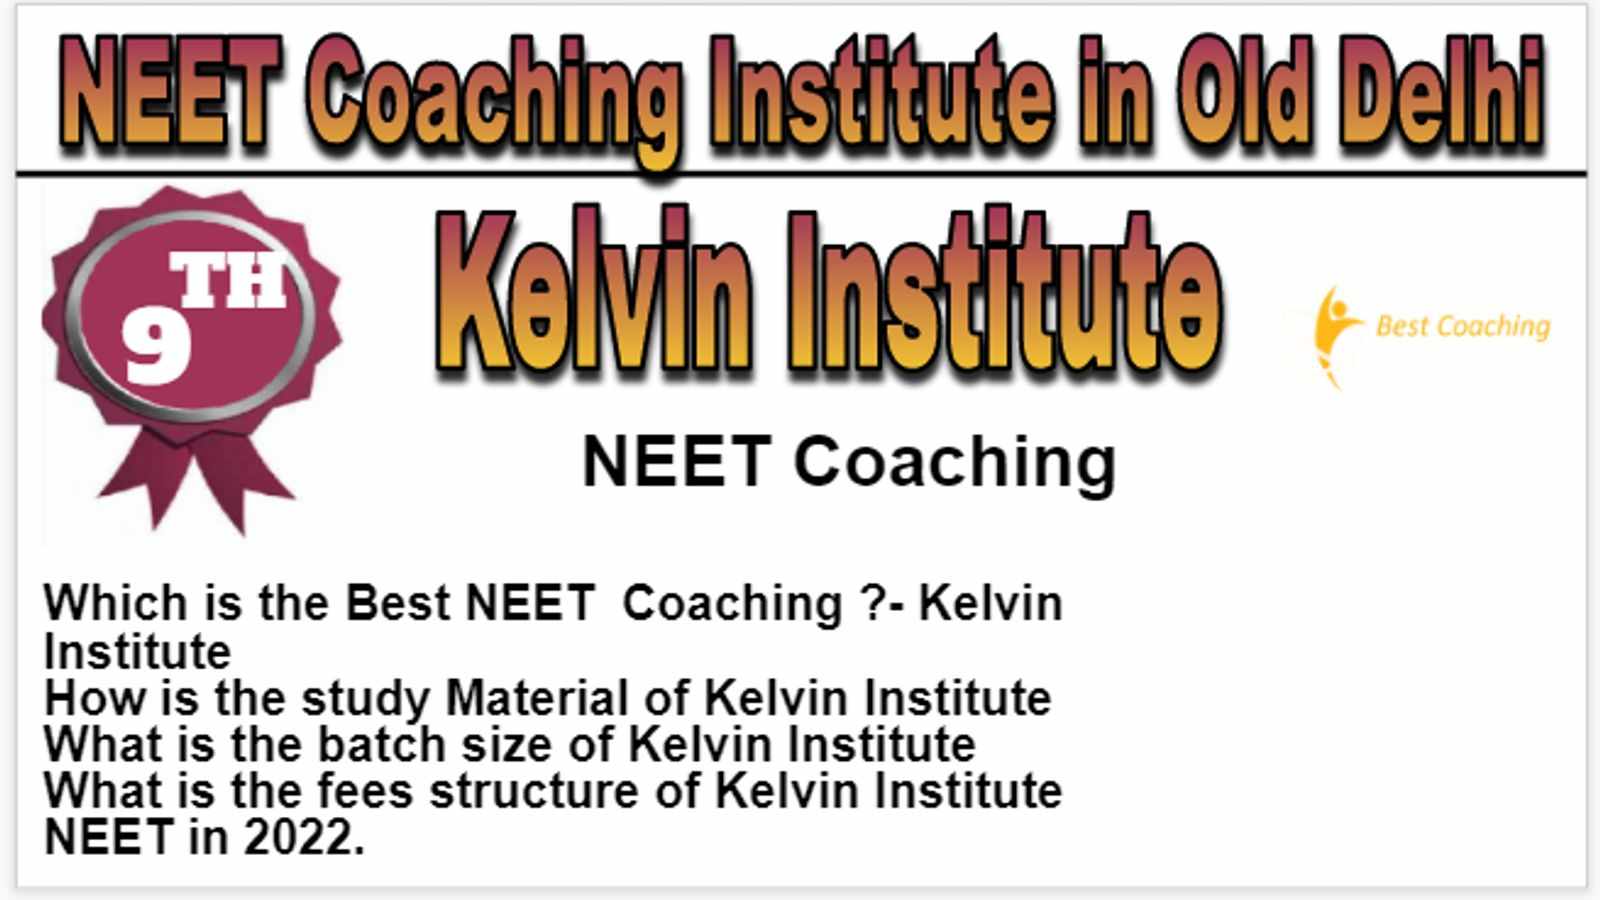 NEET Coaching Institute in Old Delhi